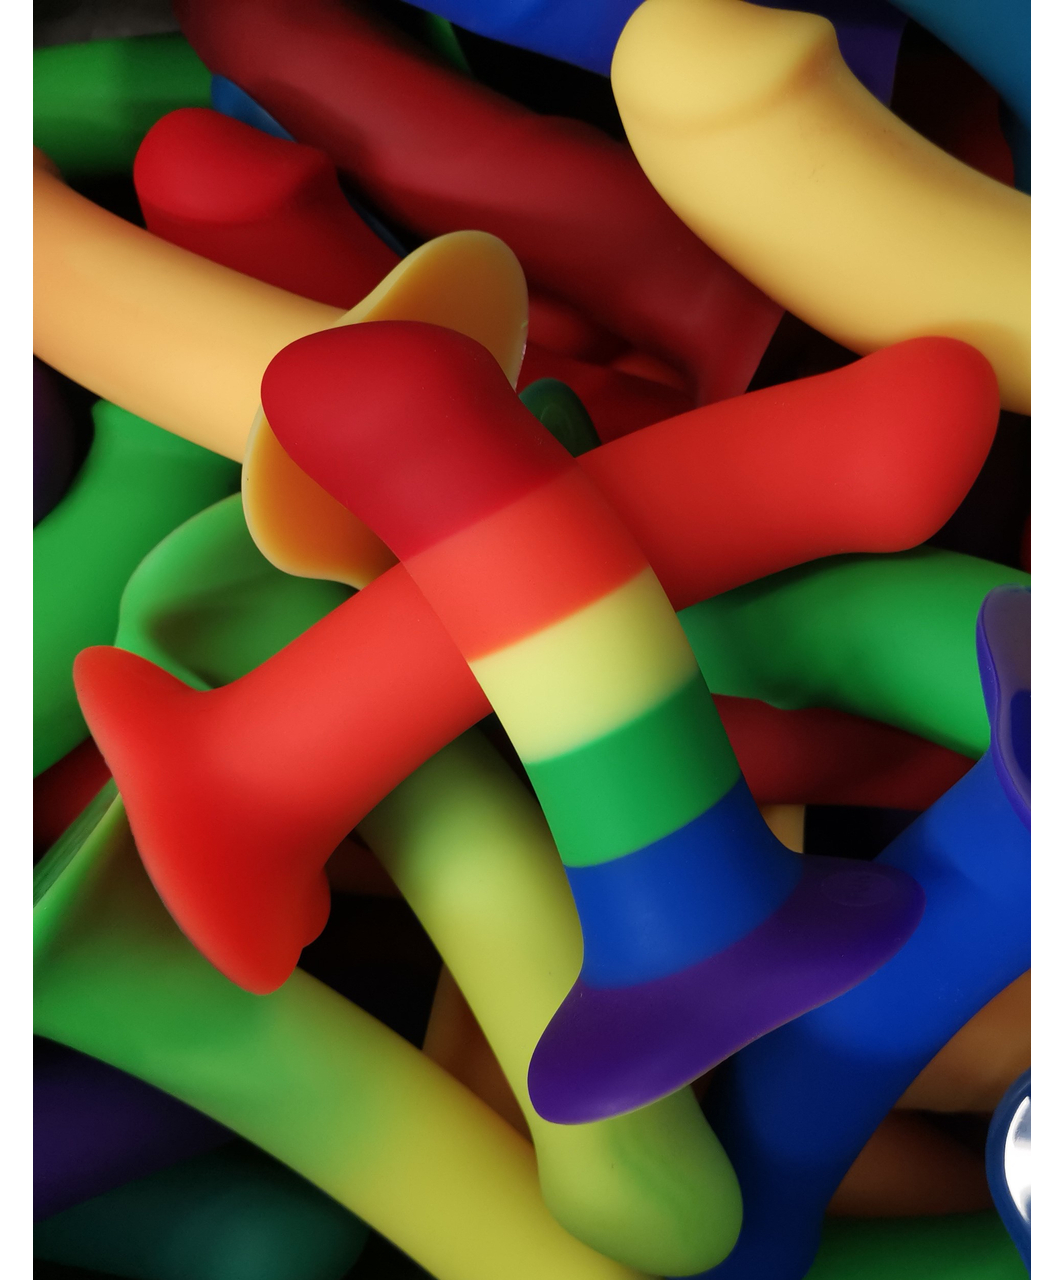 Fun Factory Amor Rainbow Pride Edition silicone dildo